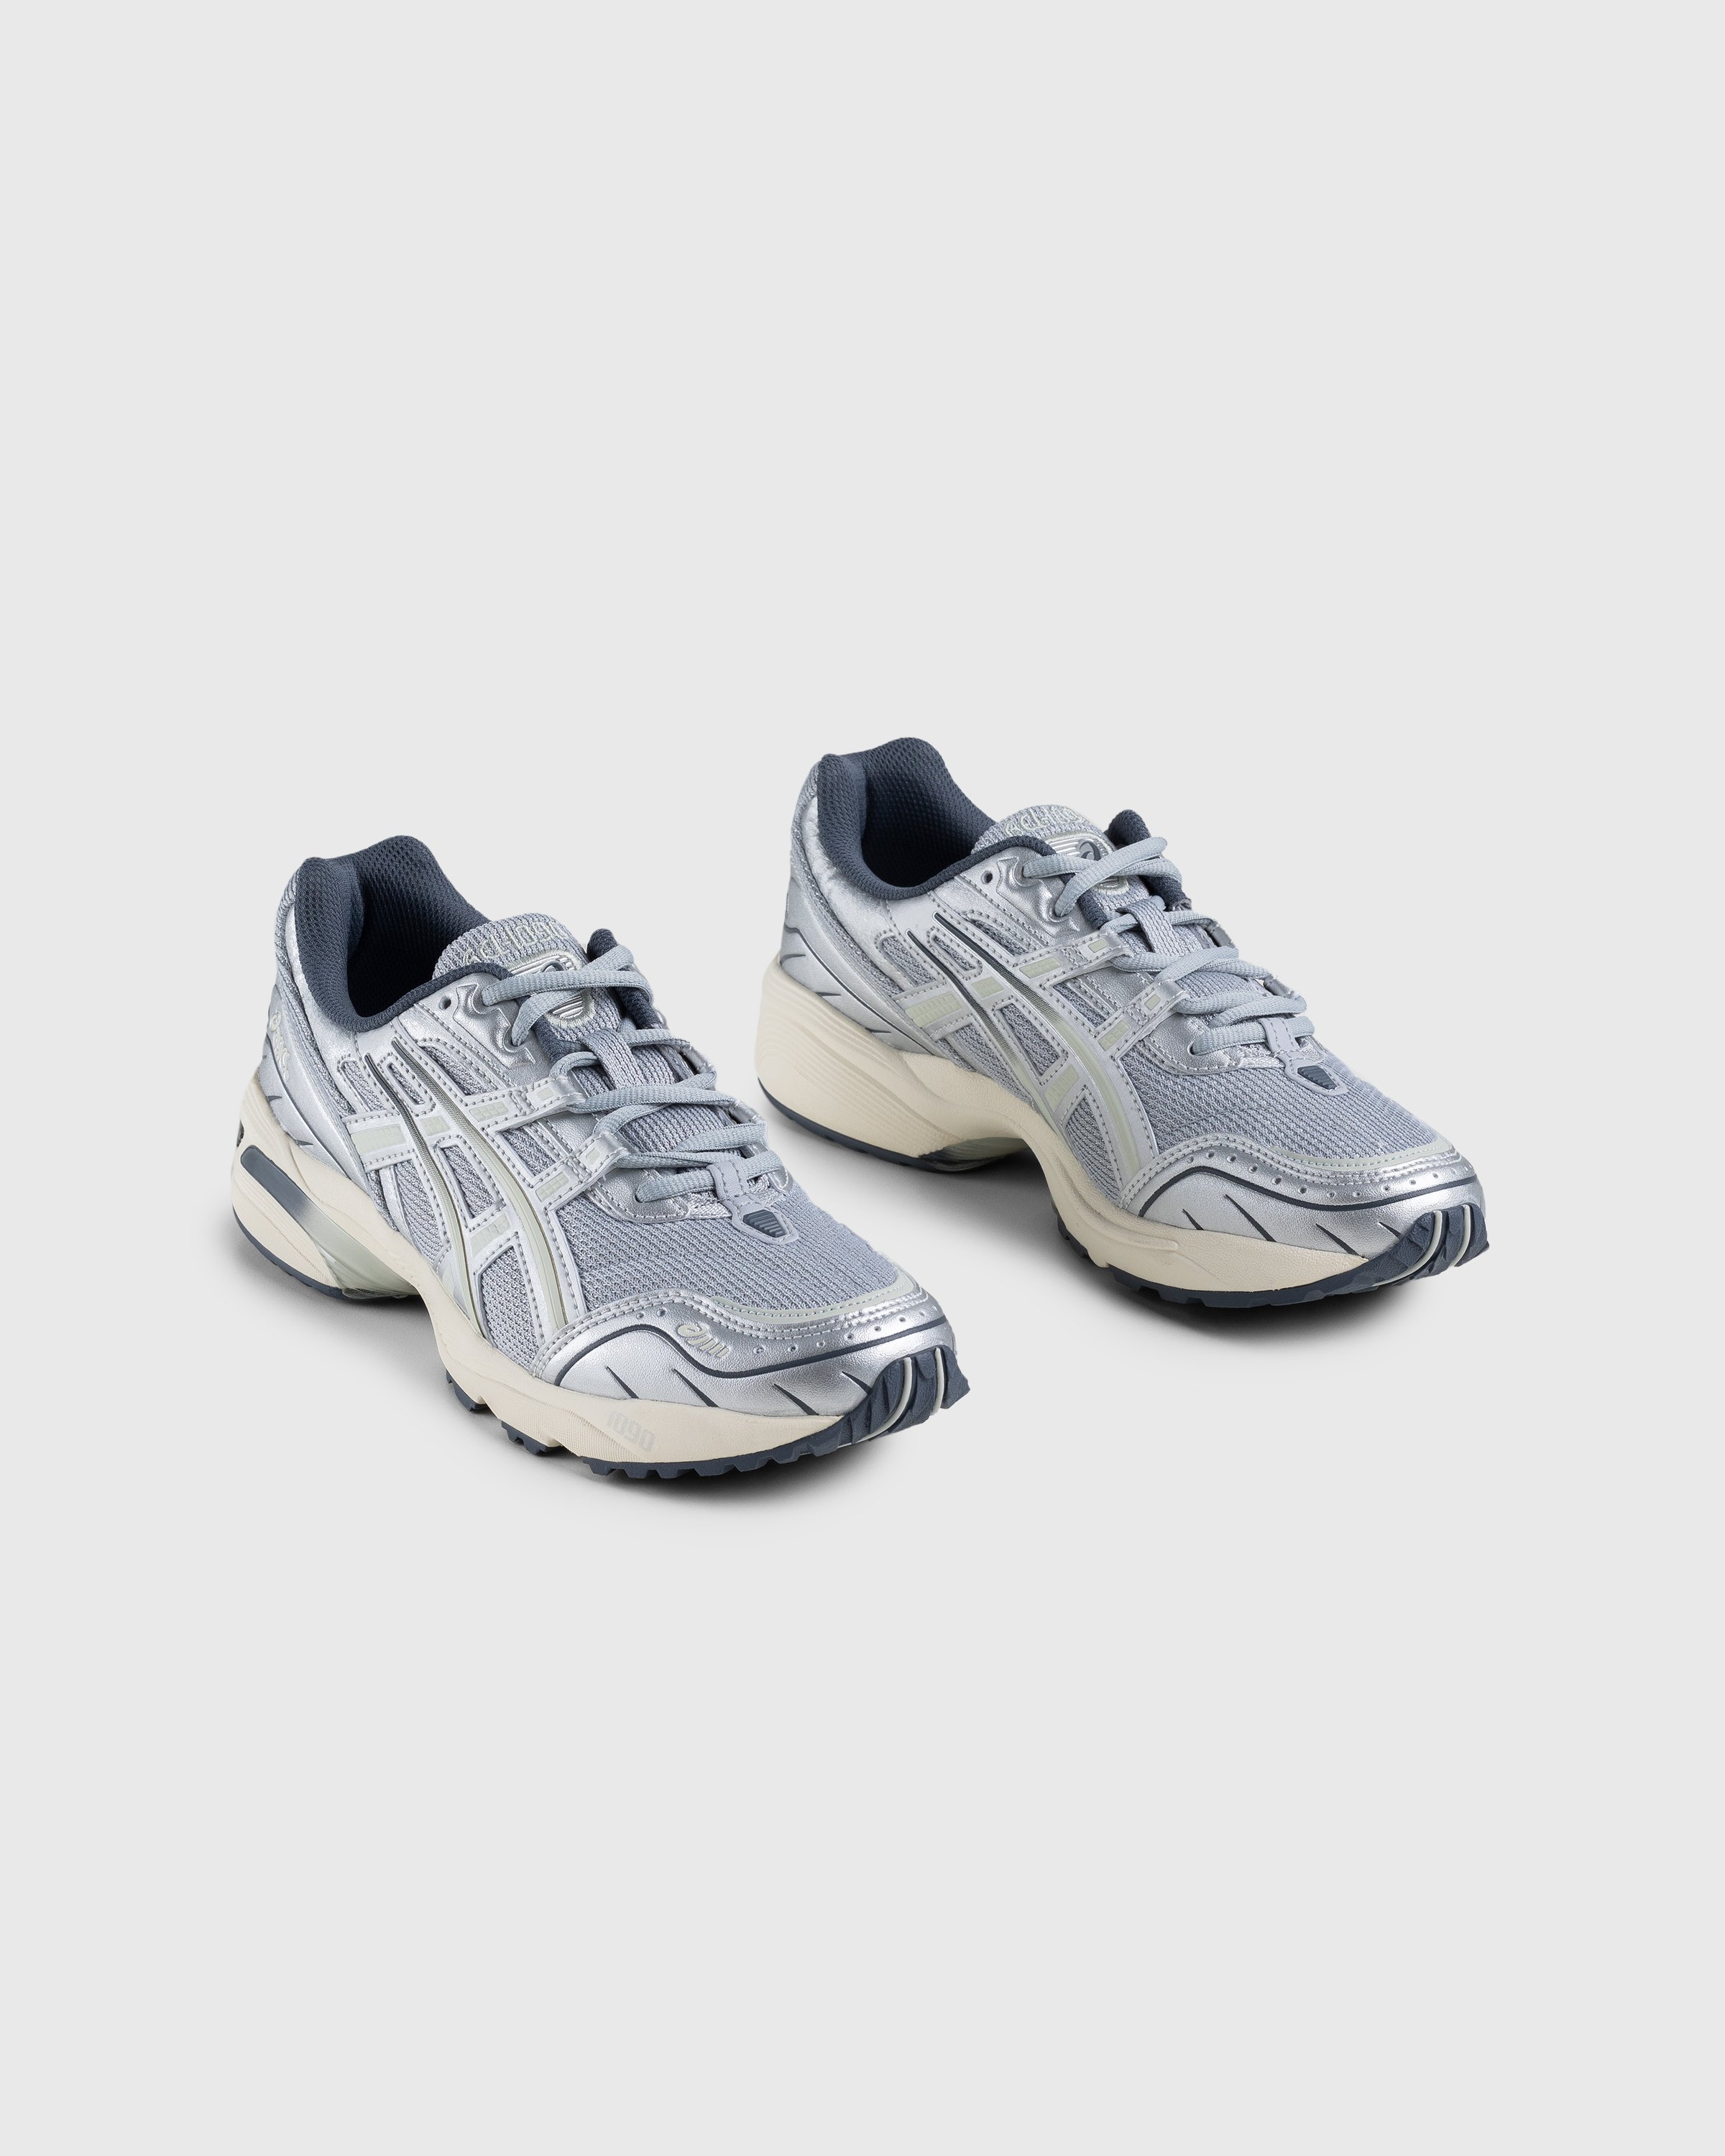 asics - GEL-1090 Piedmont Gray/Tarmac - Footwear - Grey - Image 3